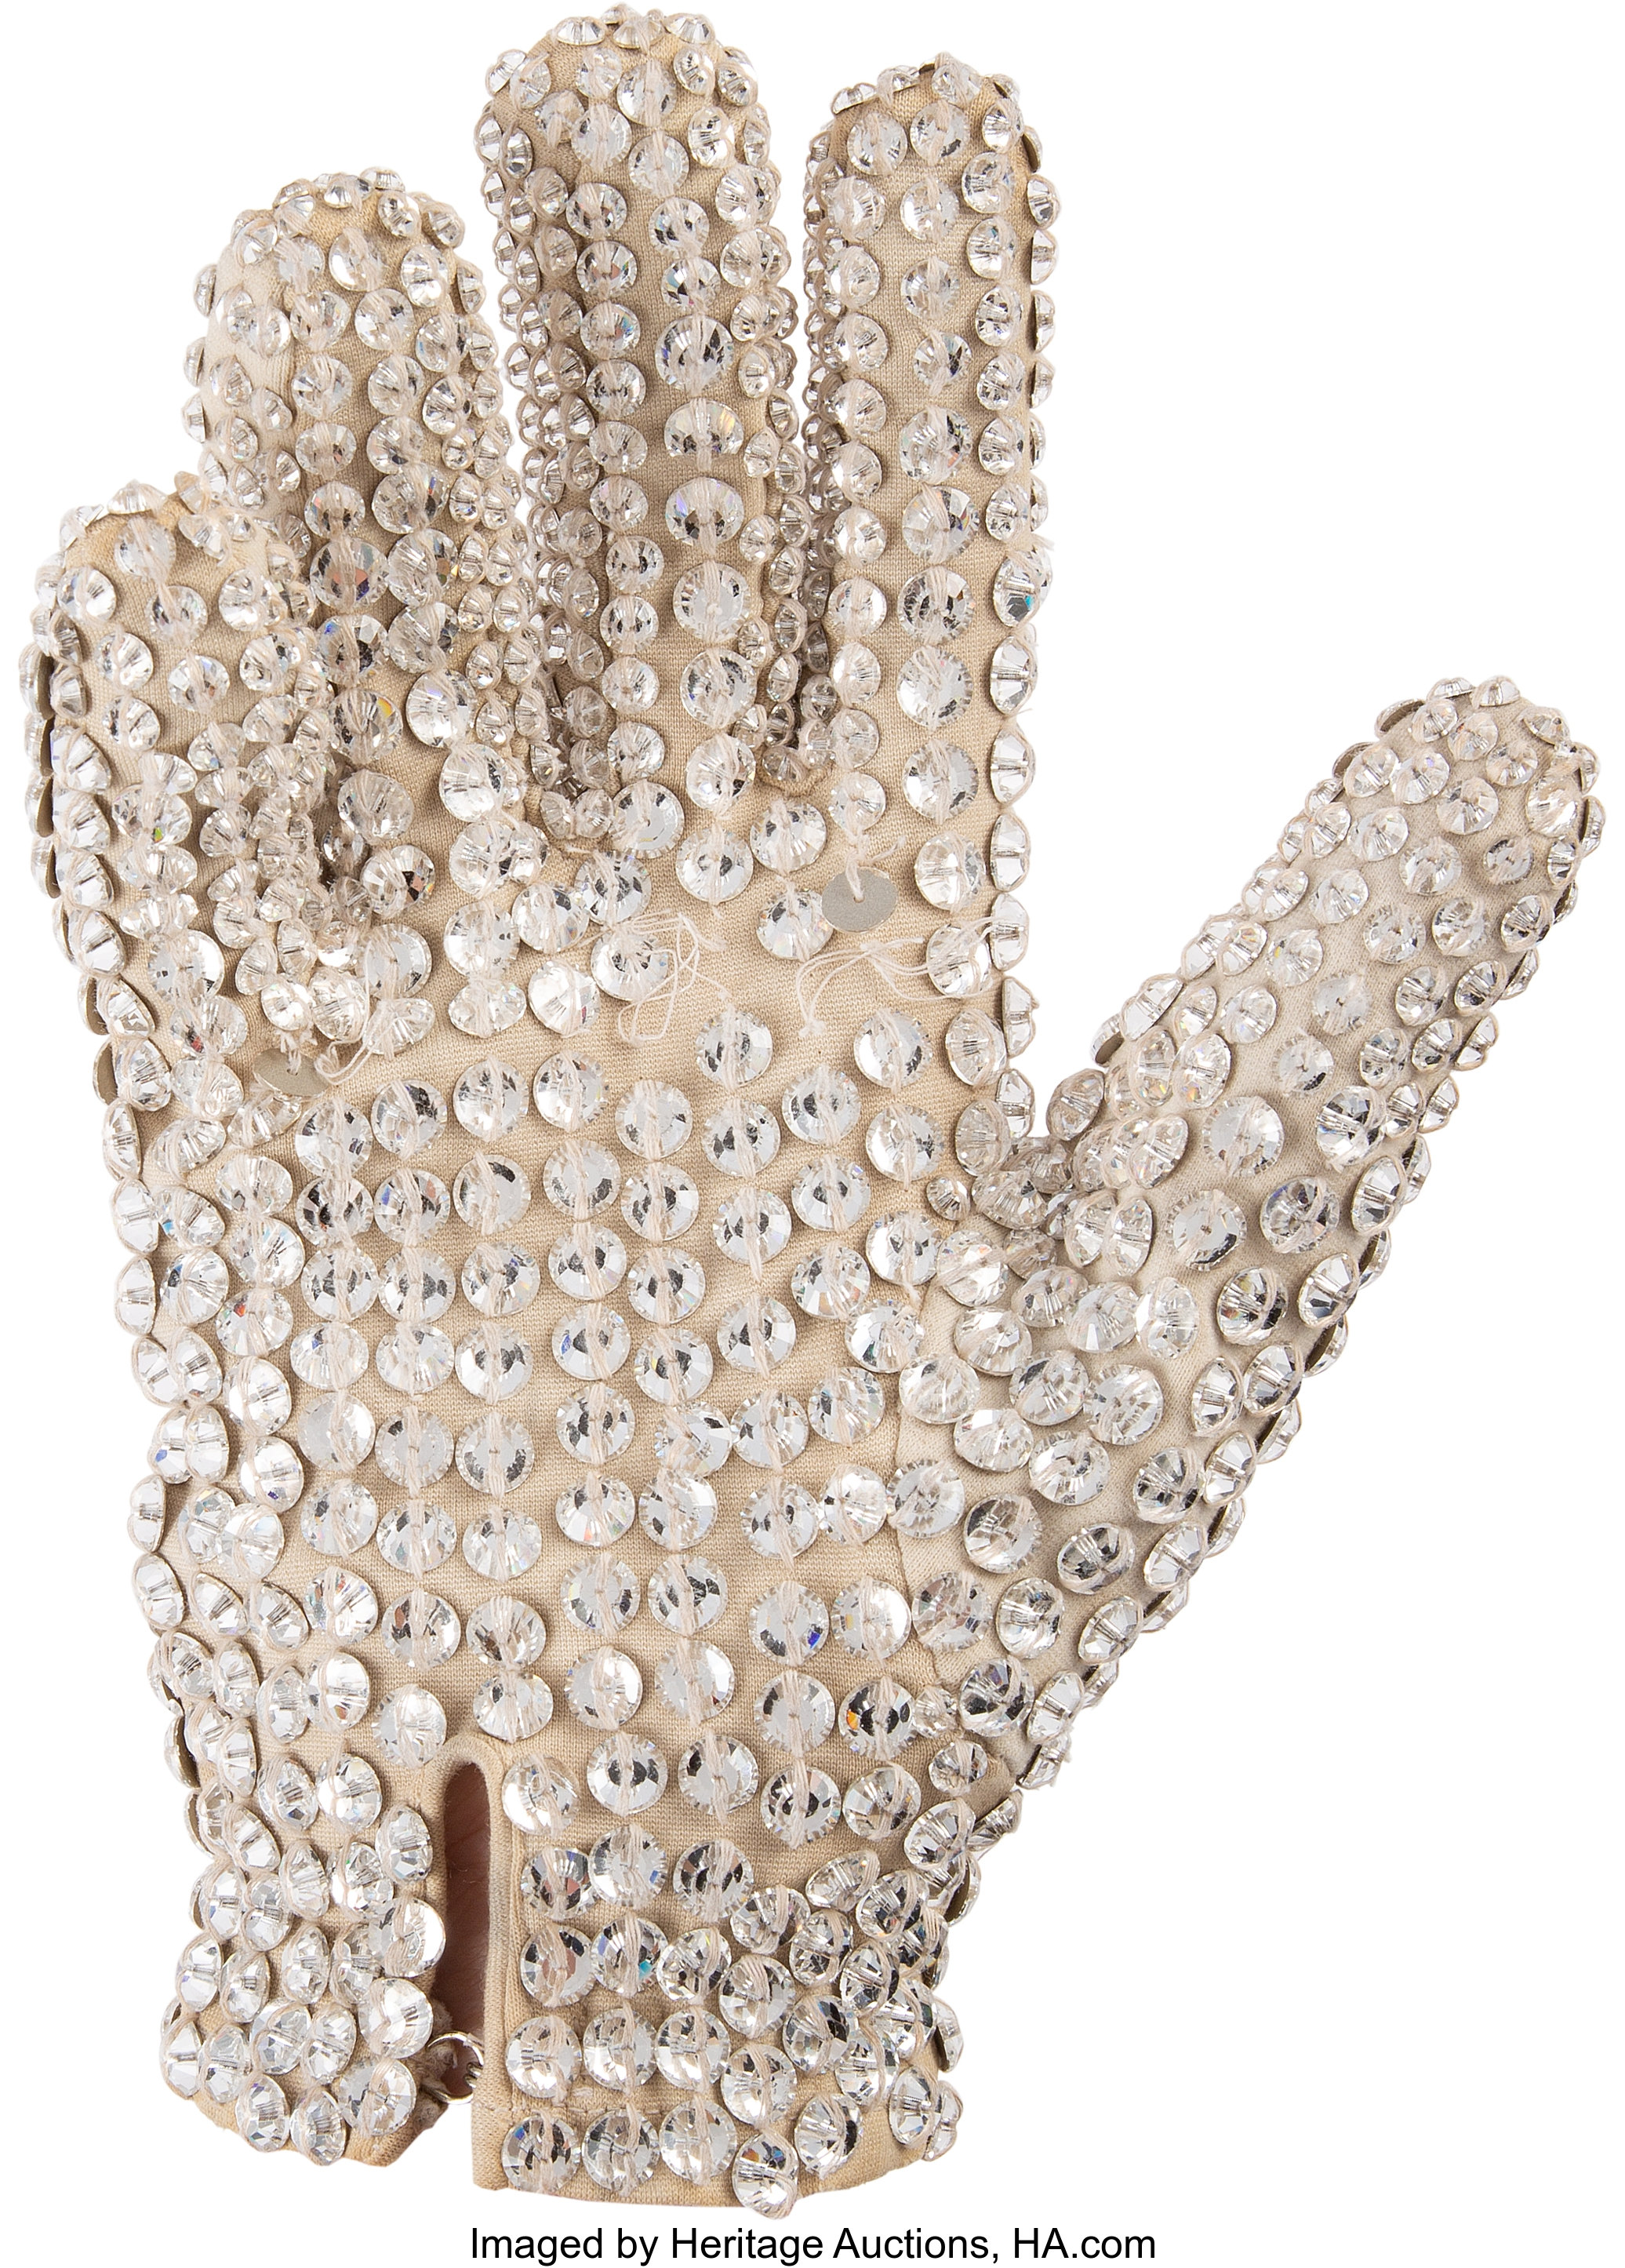 Michael Jackson's crystal studded glove earns $300,000 under the hammer -  Luxurylaunches